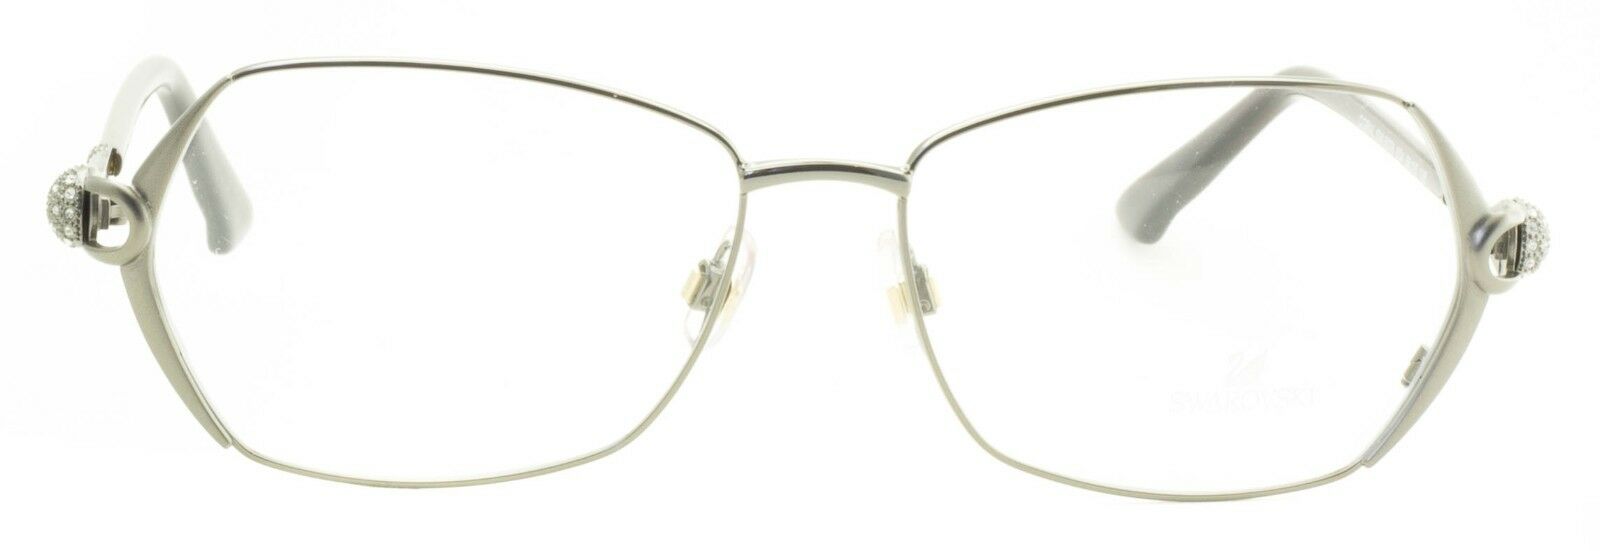 SWAROVSKI CORAL SW 5078 034 Eyewear FRAMES RX Optical Glasses Eyeglasses - Italy